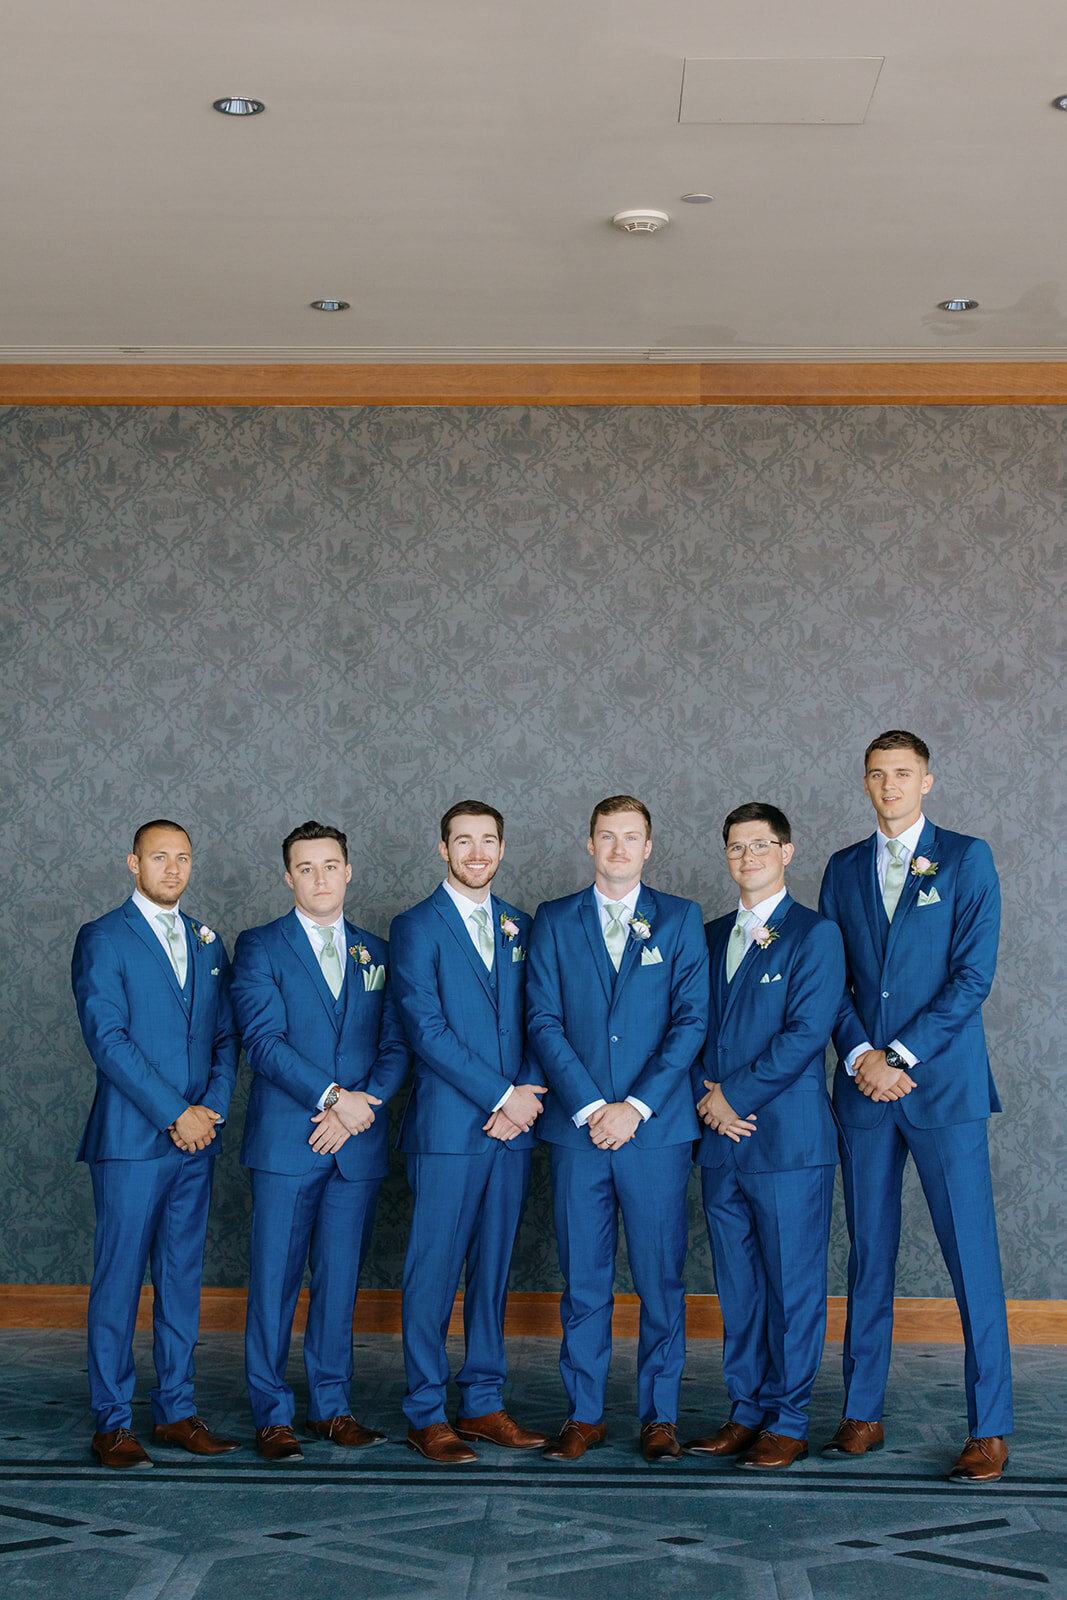 groomsmen-blue-suits-group-photo